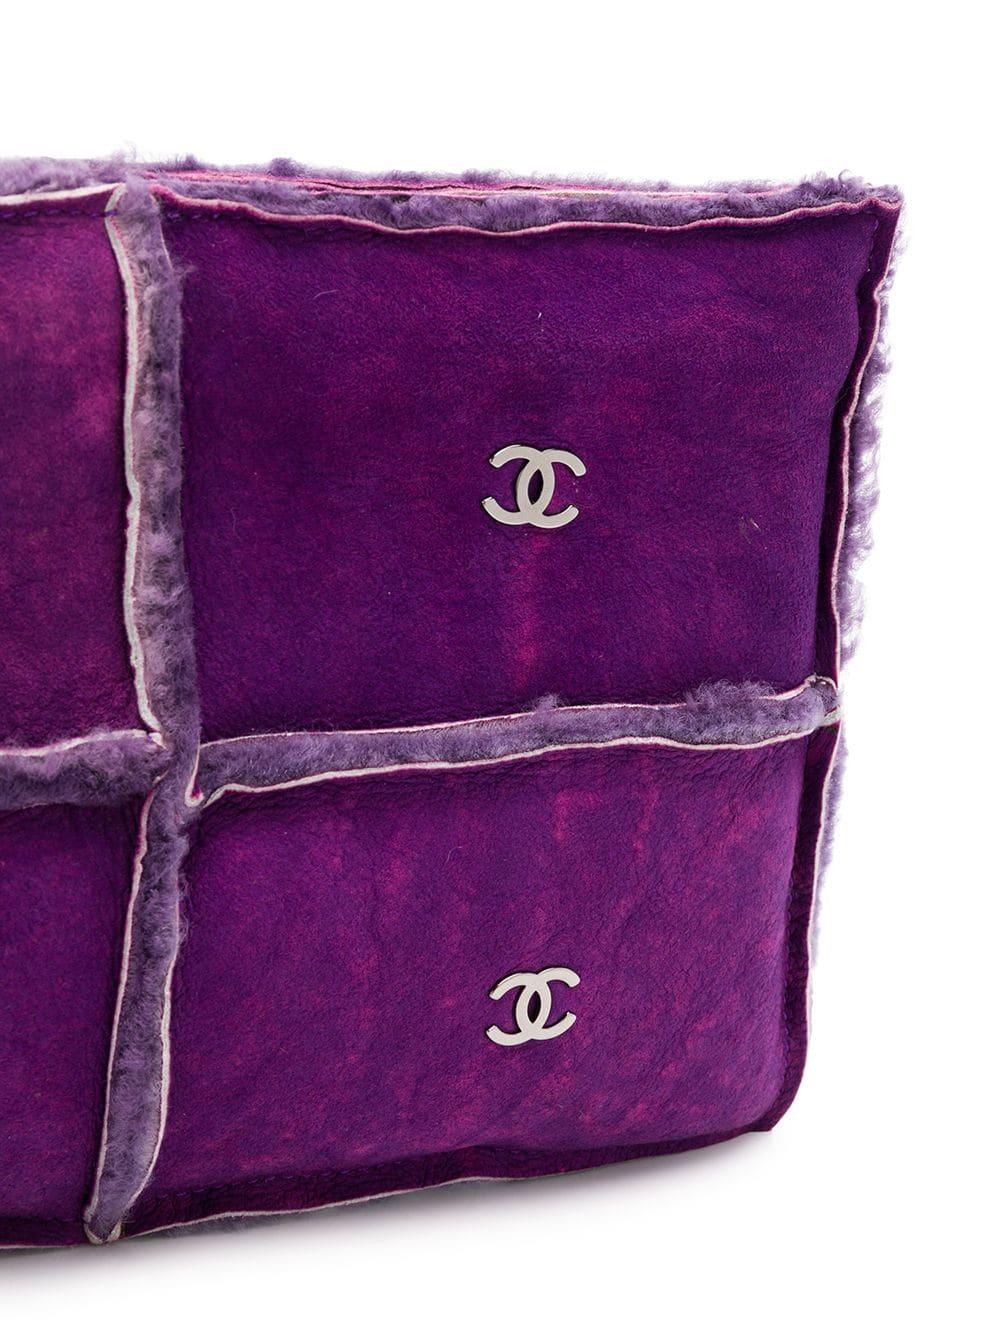 Women's Chanel Purple Mouton Clutch Bag